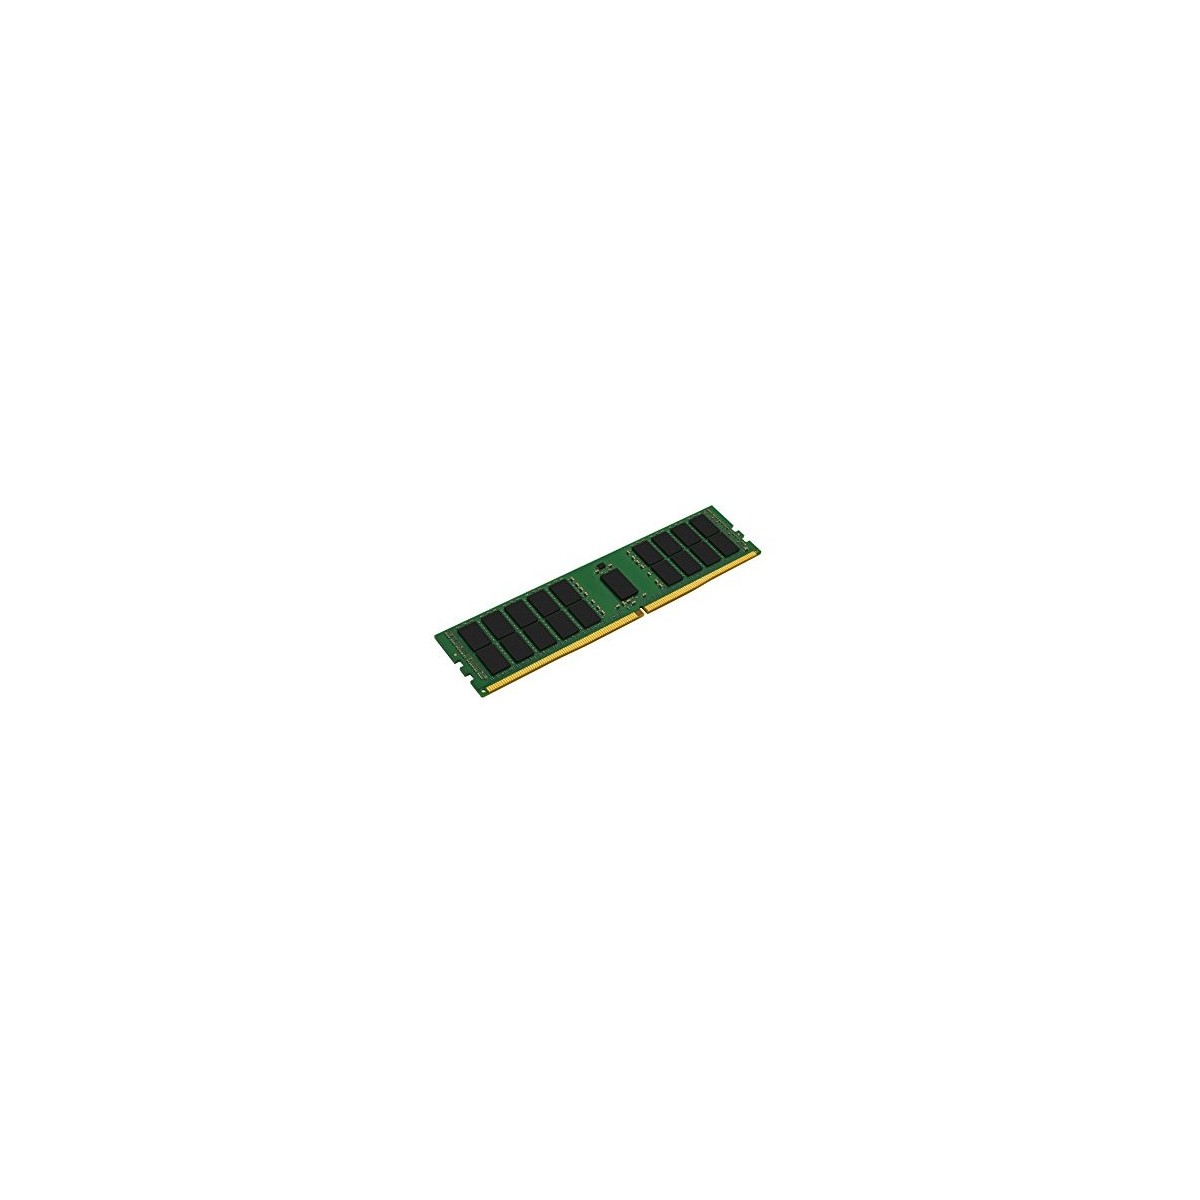 Kingston System Specific Memory 64GB DDR4 2400MHz - 64 GB - 1 x 64 GB - DDR4 - 2400 MHz - 288-pin DIMM - Green